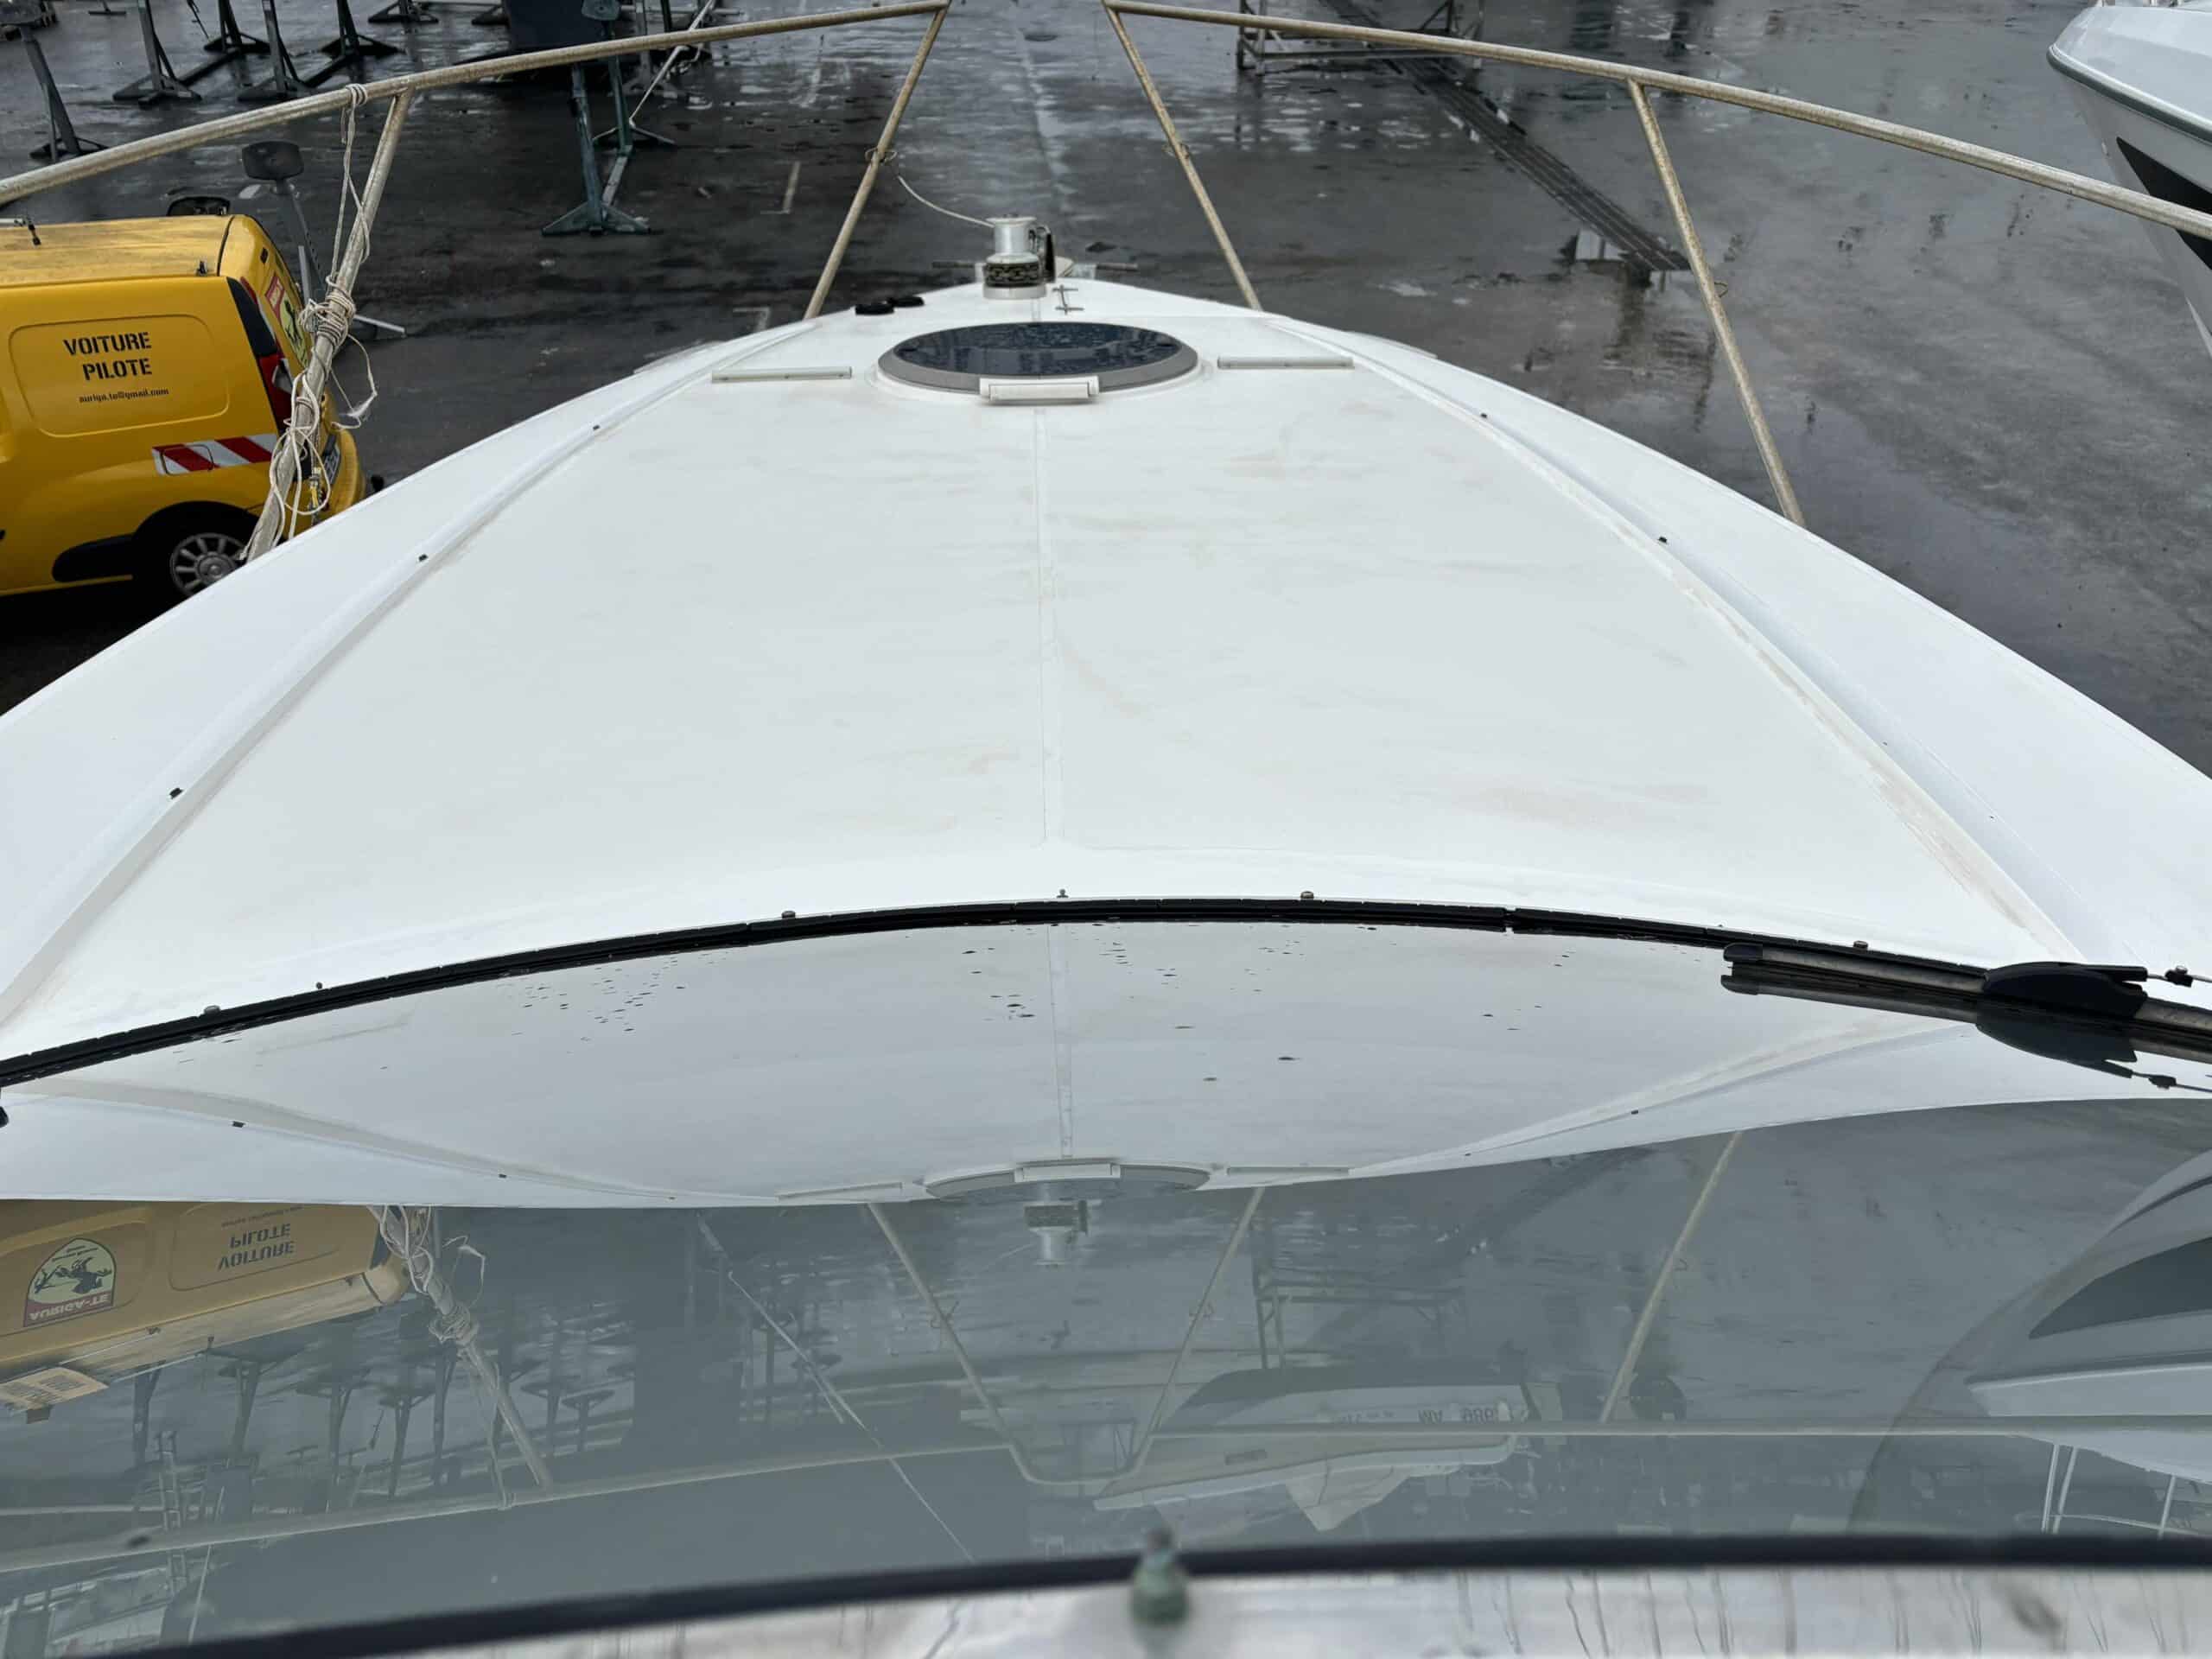 Fairline Targa 31 bateau vedette